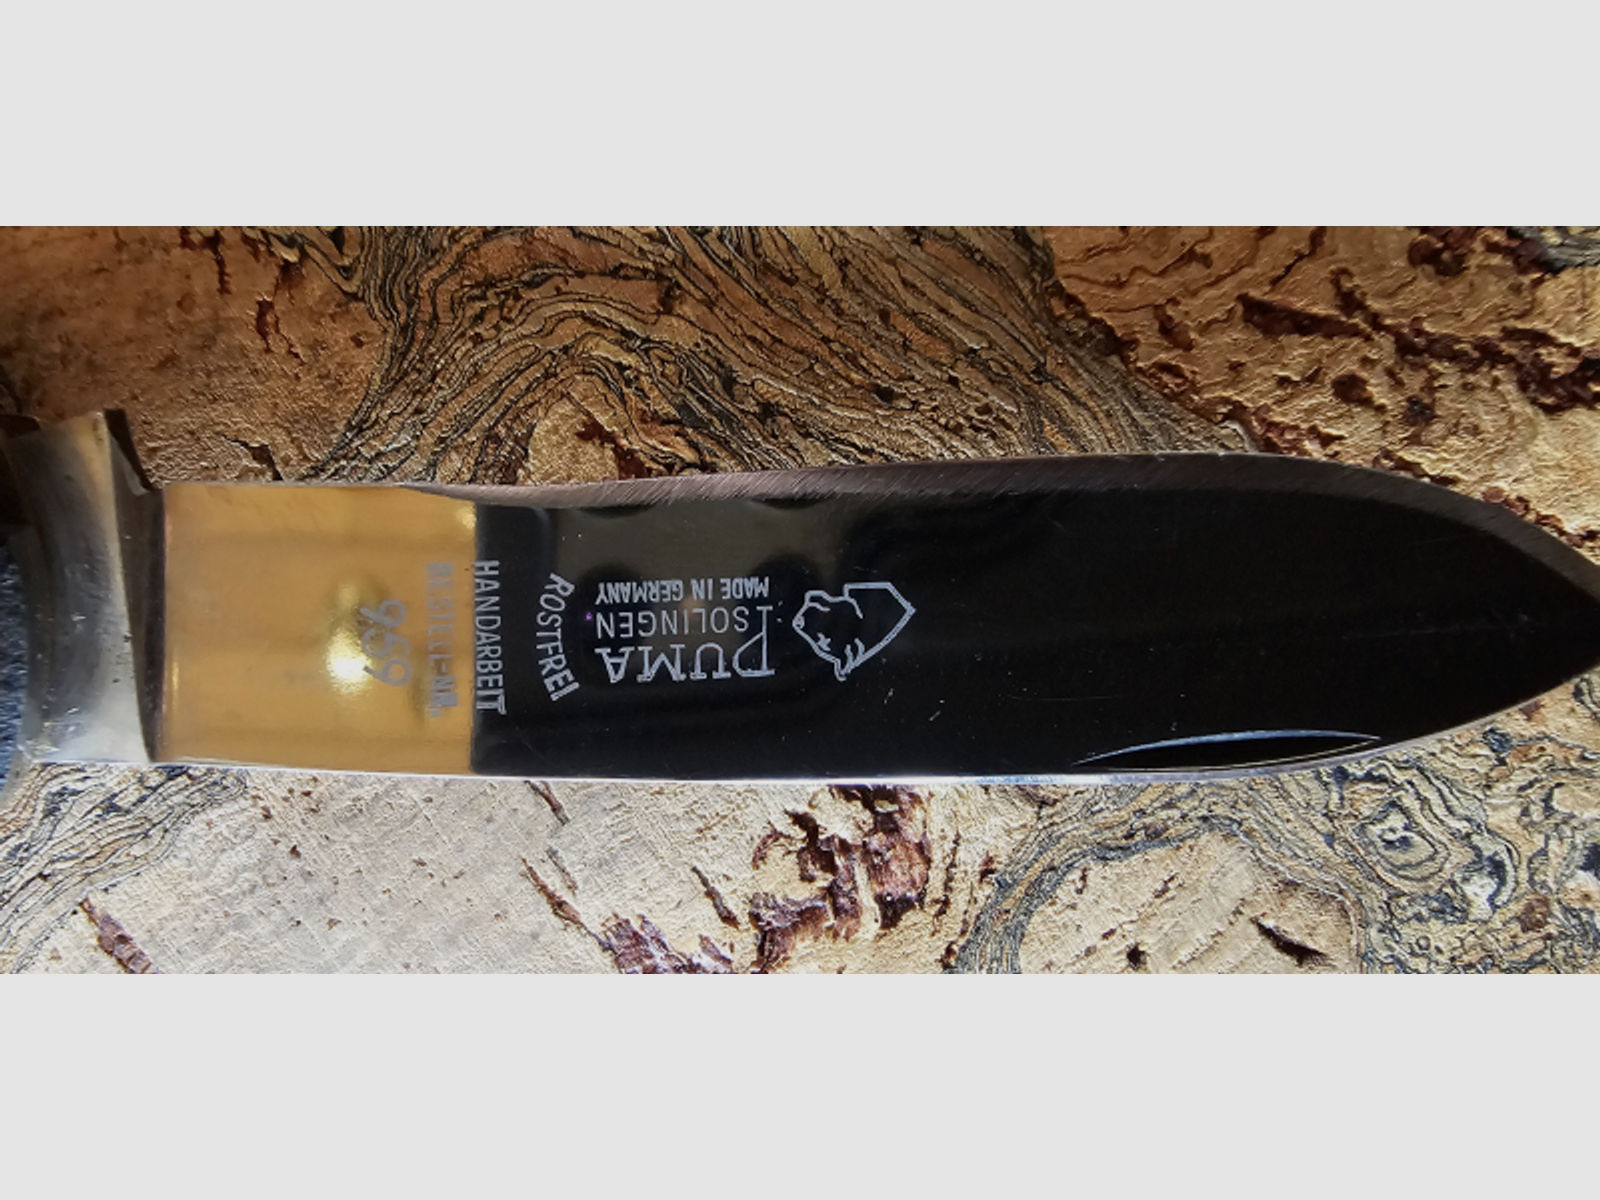 Original Puma Universal Messer 959 nach Oberforstmeister Frevert